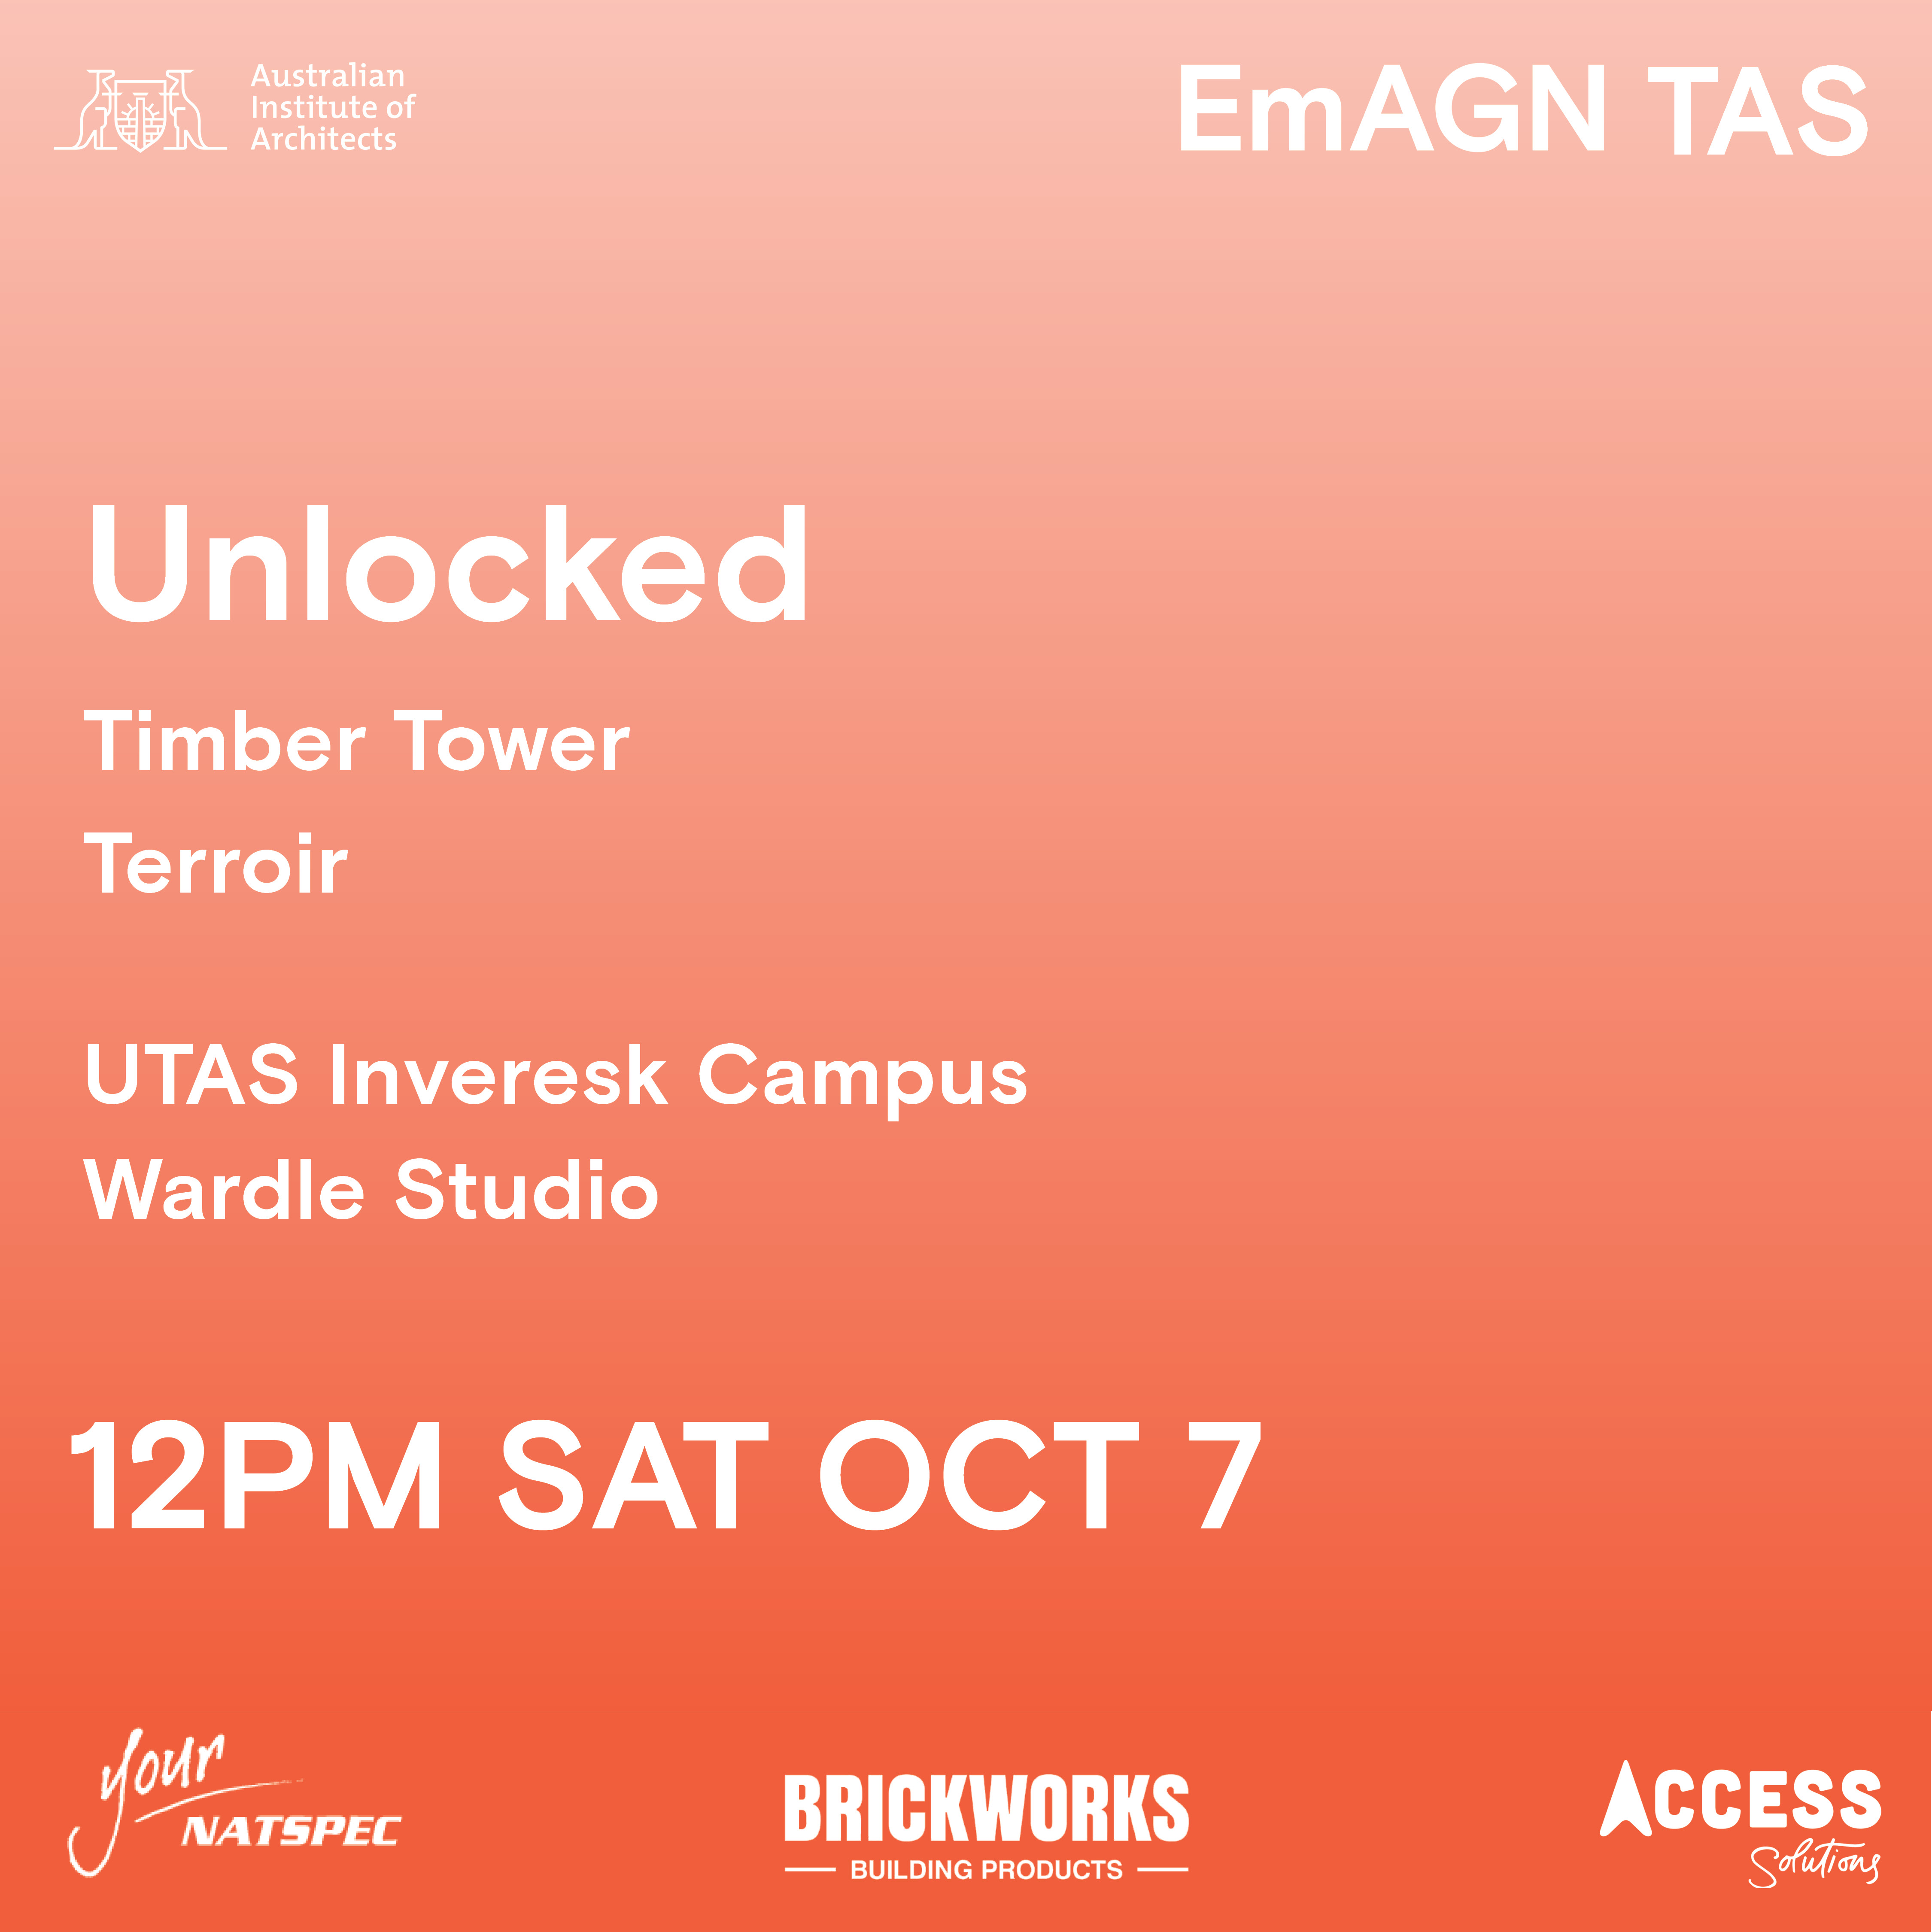 EmAGN TAS UNLOCKED | TIMBER TOWER & UTAS INVERESK CAMPUS